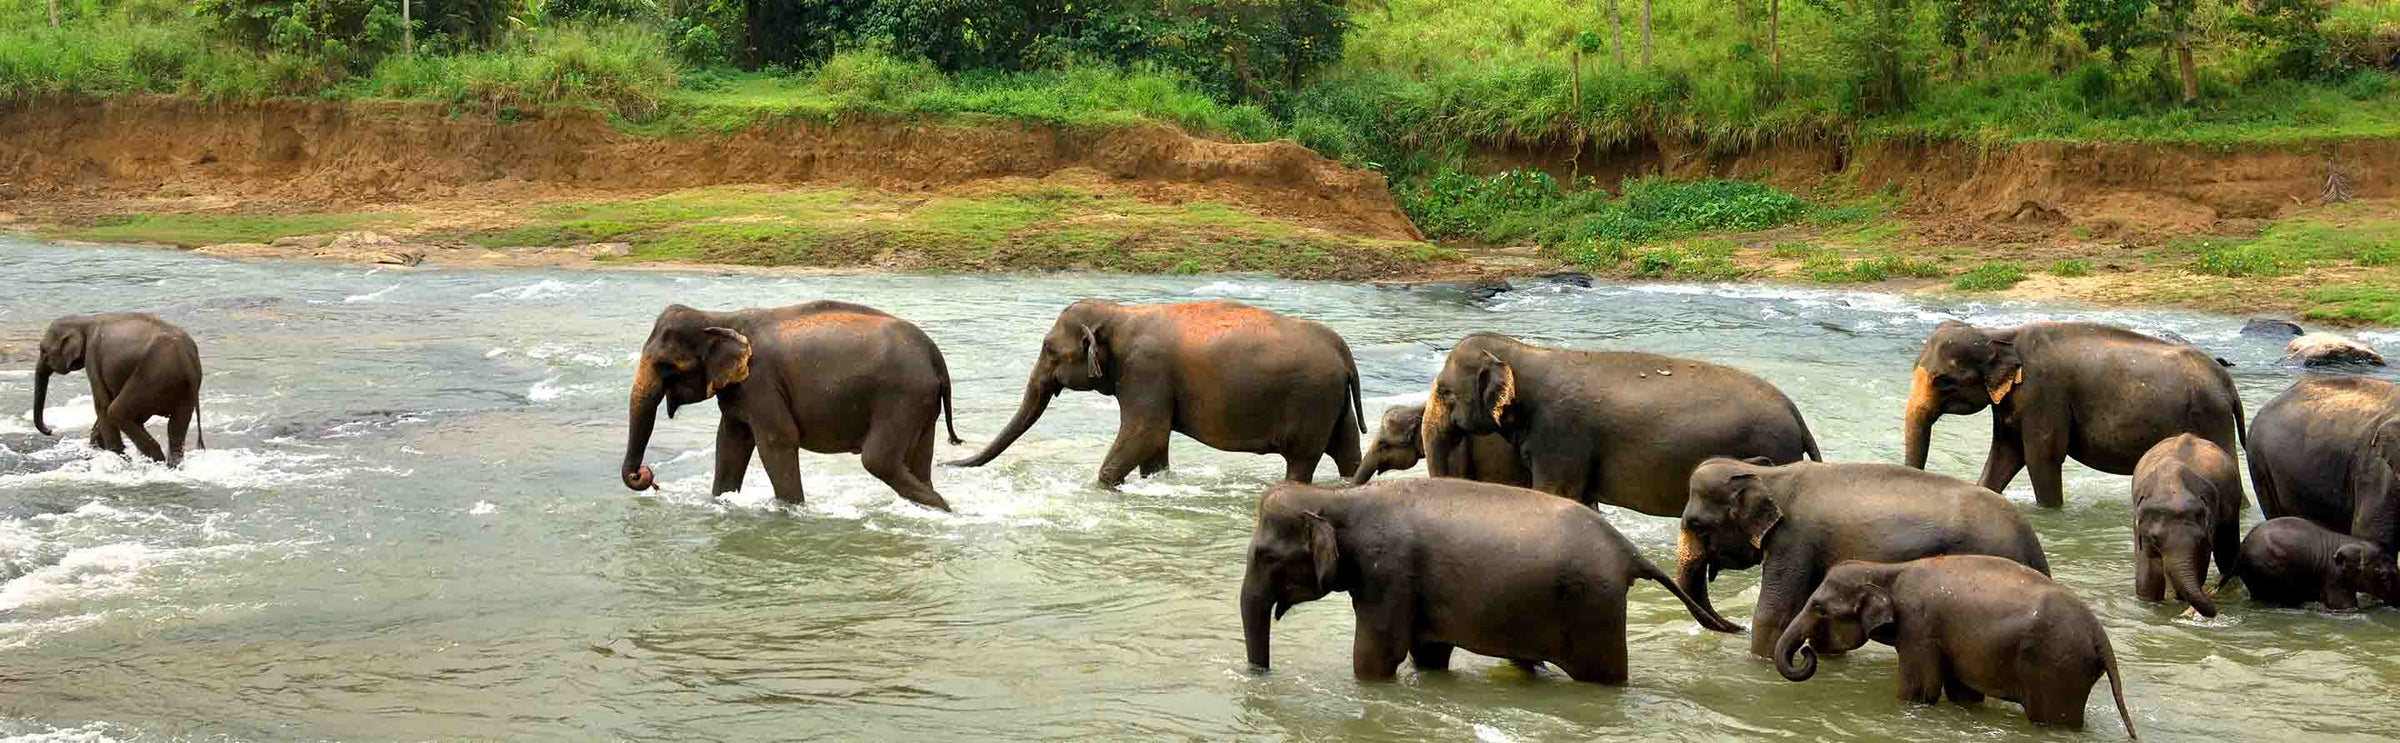 Elephant-Conservation-Sufferring-Apparel-com-Refund-banner-2880x890.jpg